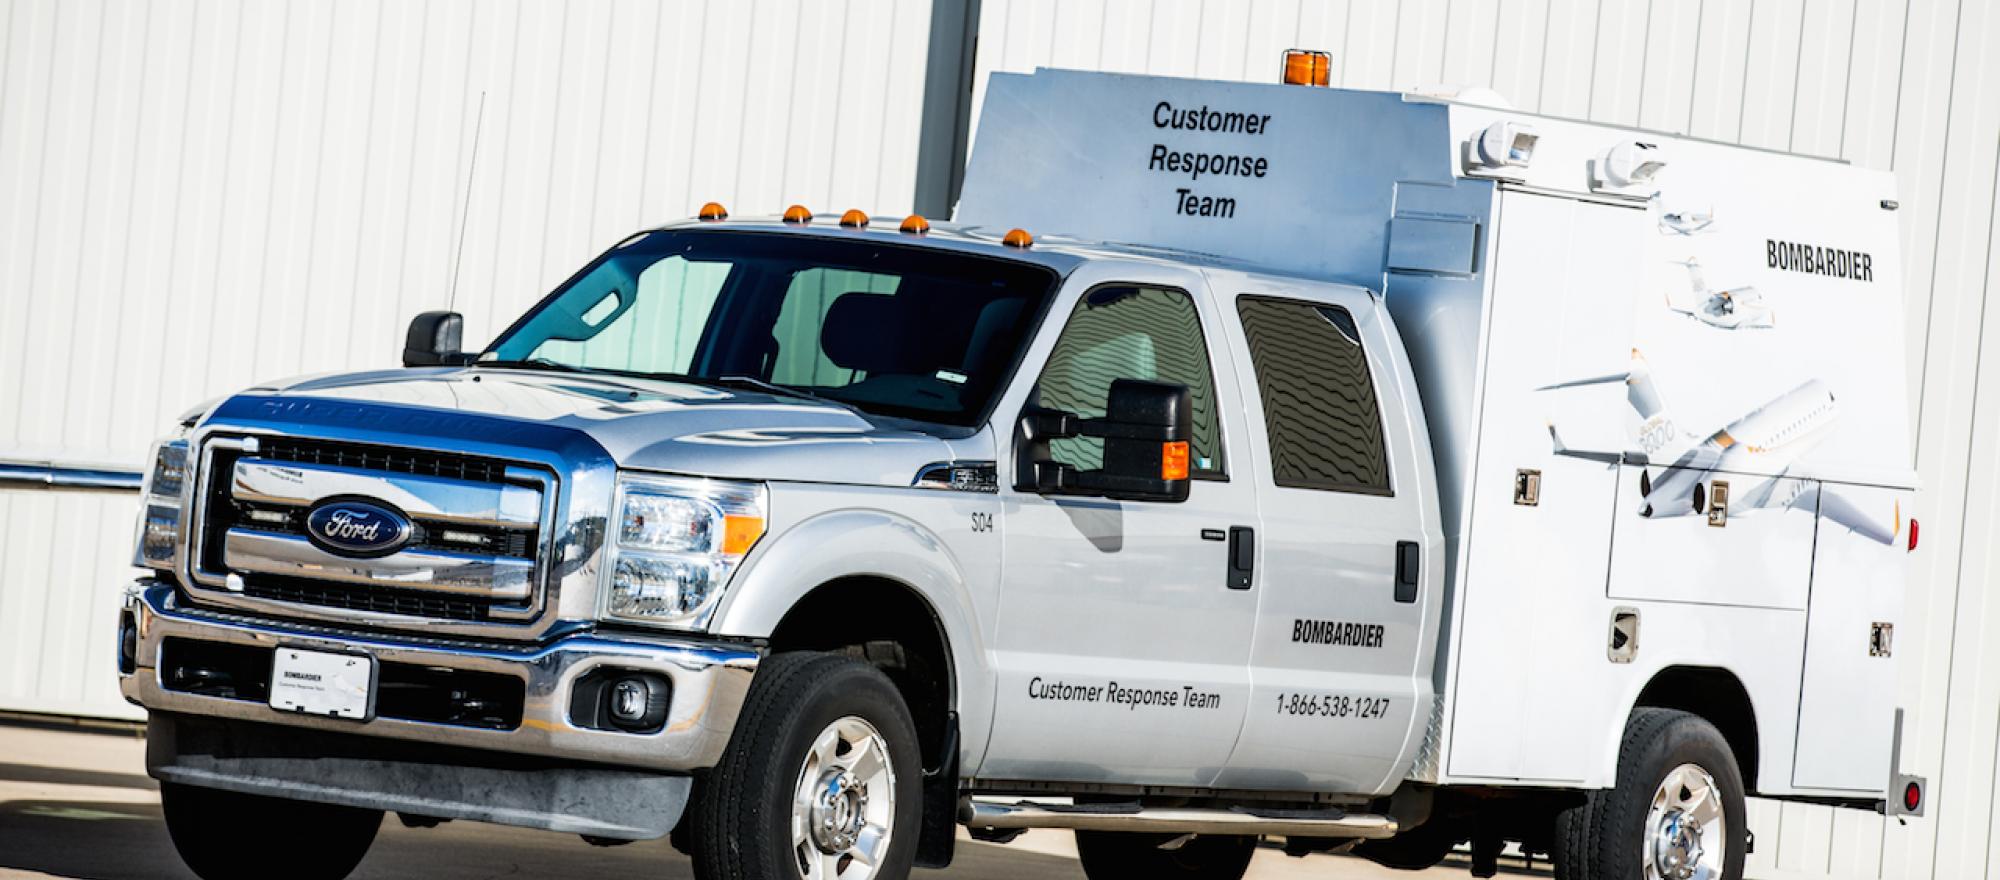 Bombardier mobile response team truck